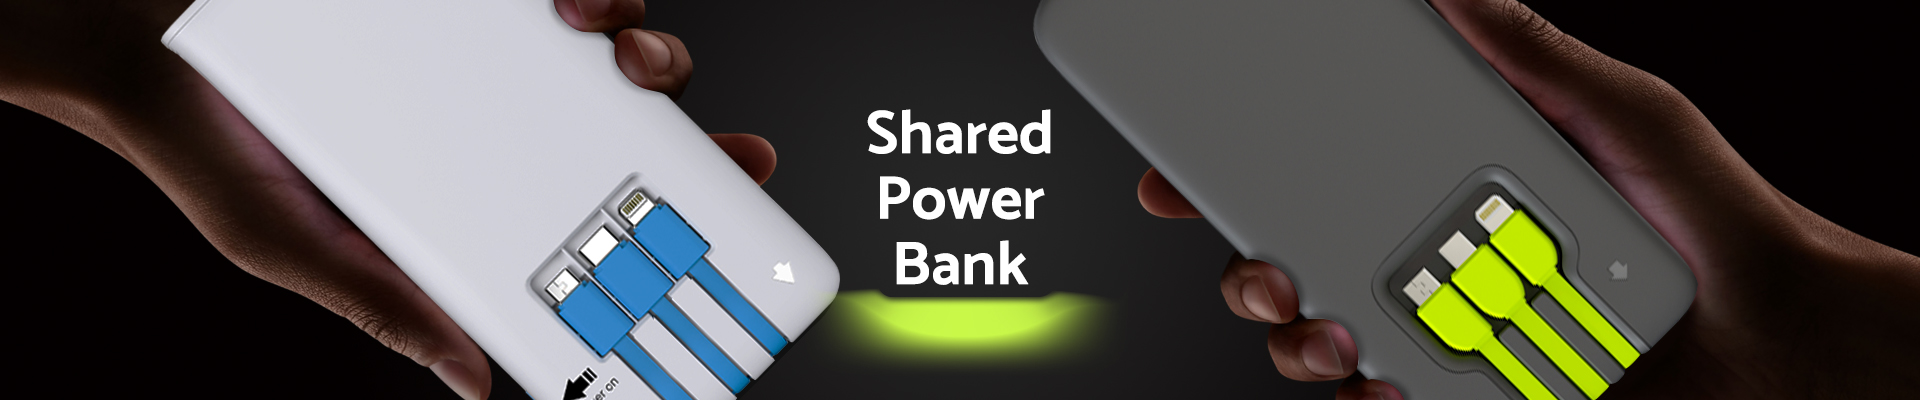 Shared Power Bank